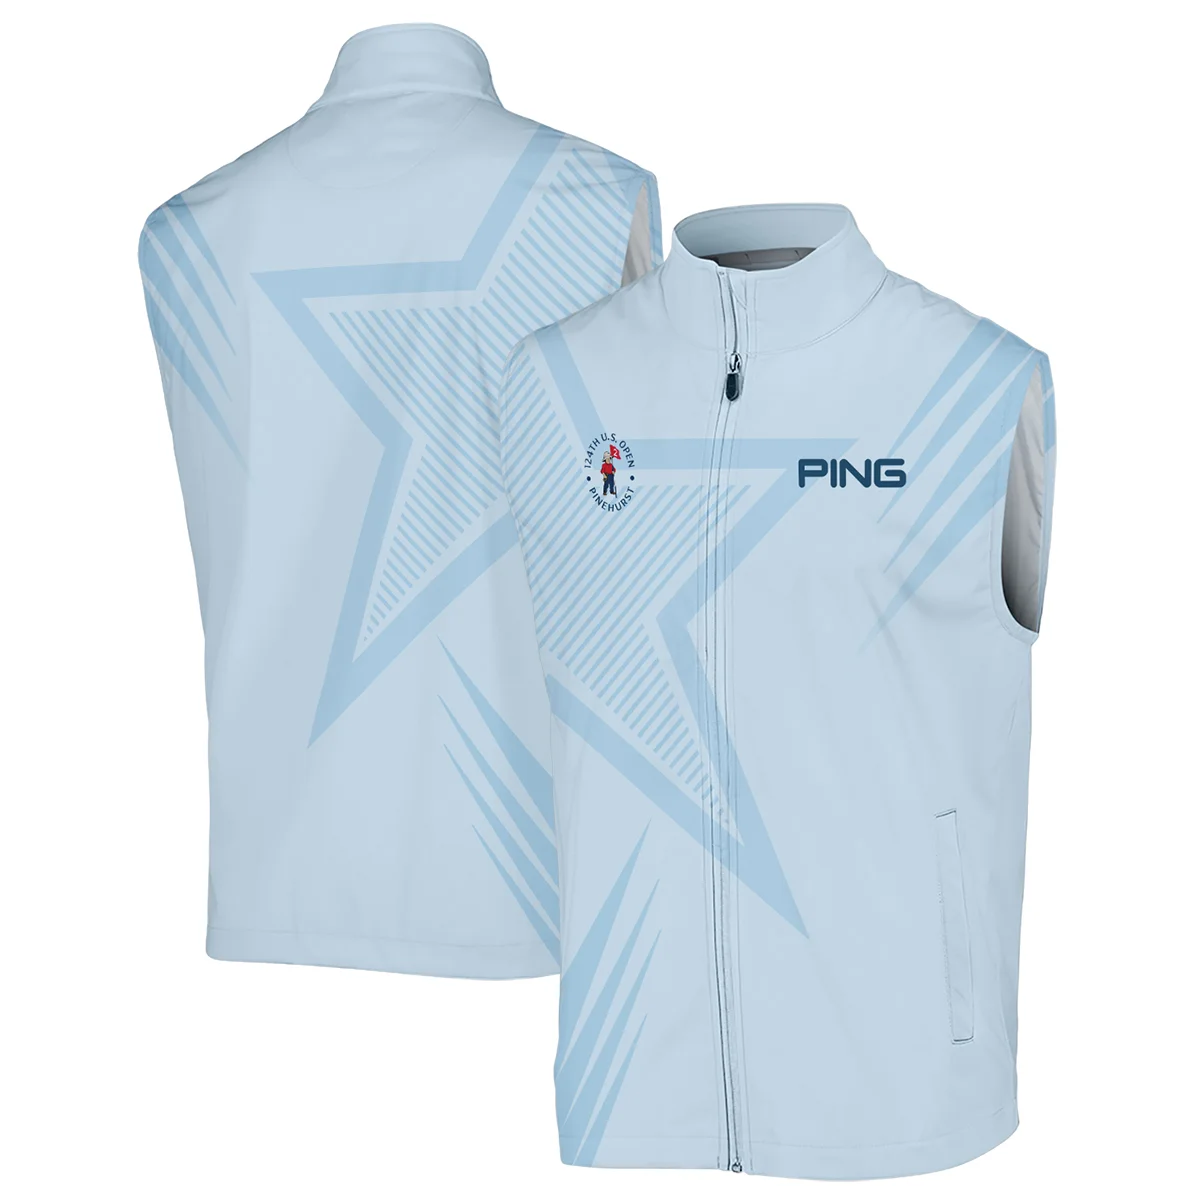 124th U.S. Open Pinehurst Golf Star Line Pattern Light Blue Ping Sleeveless Jacket Style Classic Sleeveless Jacket